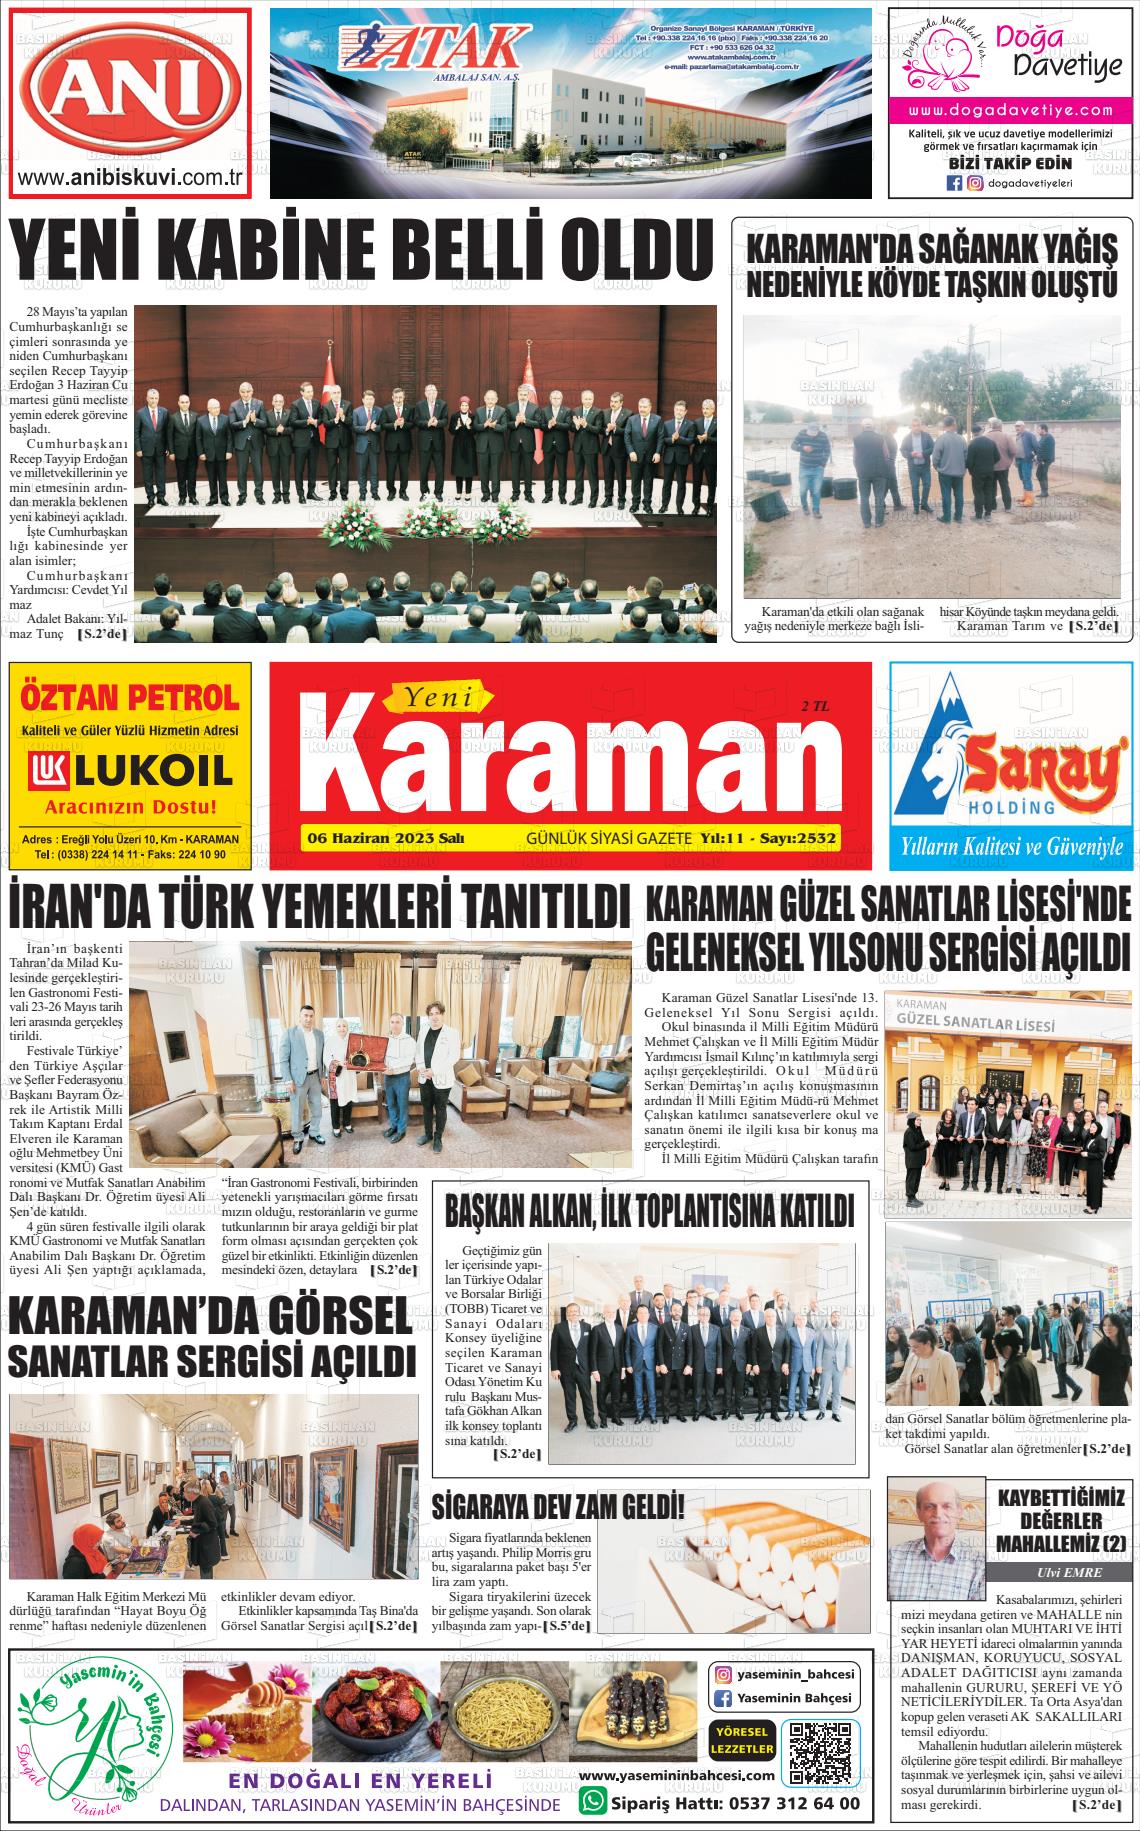 06 Haziran 2023 Yeni Karaman Gazete Manşeti